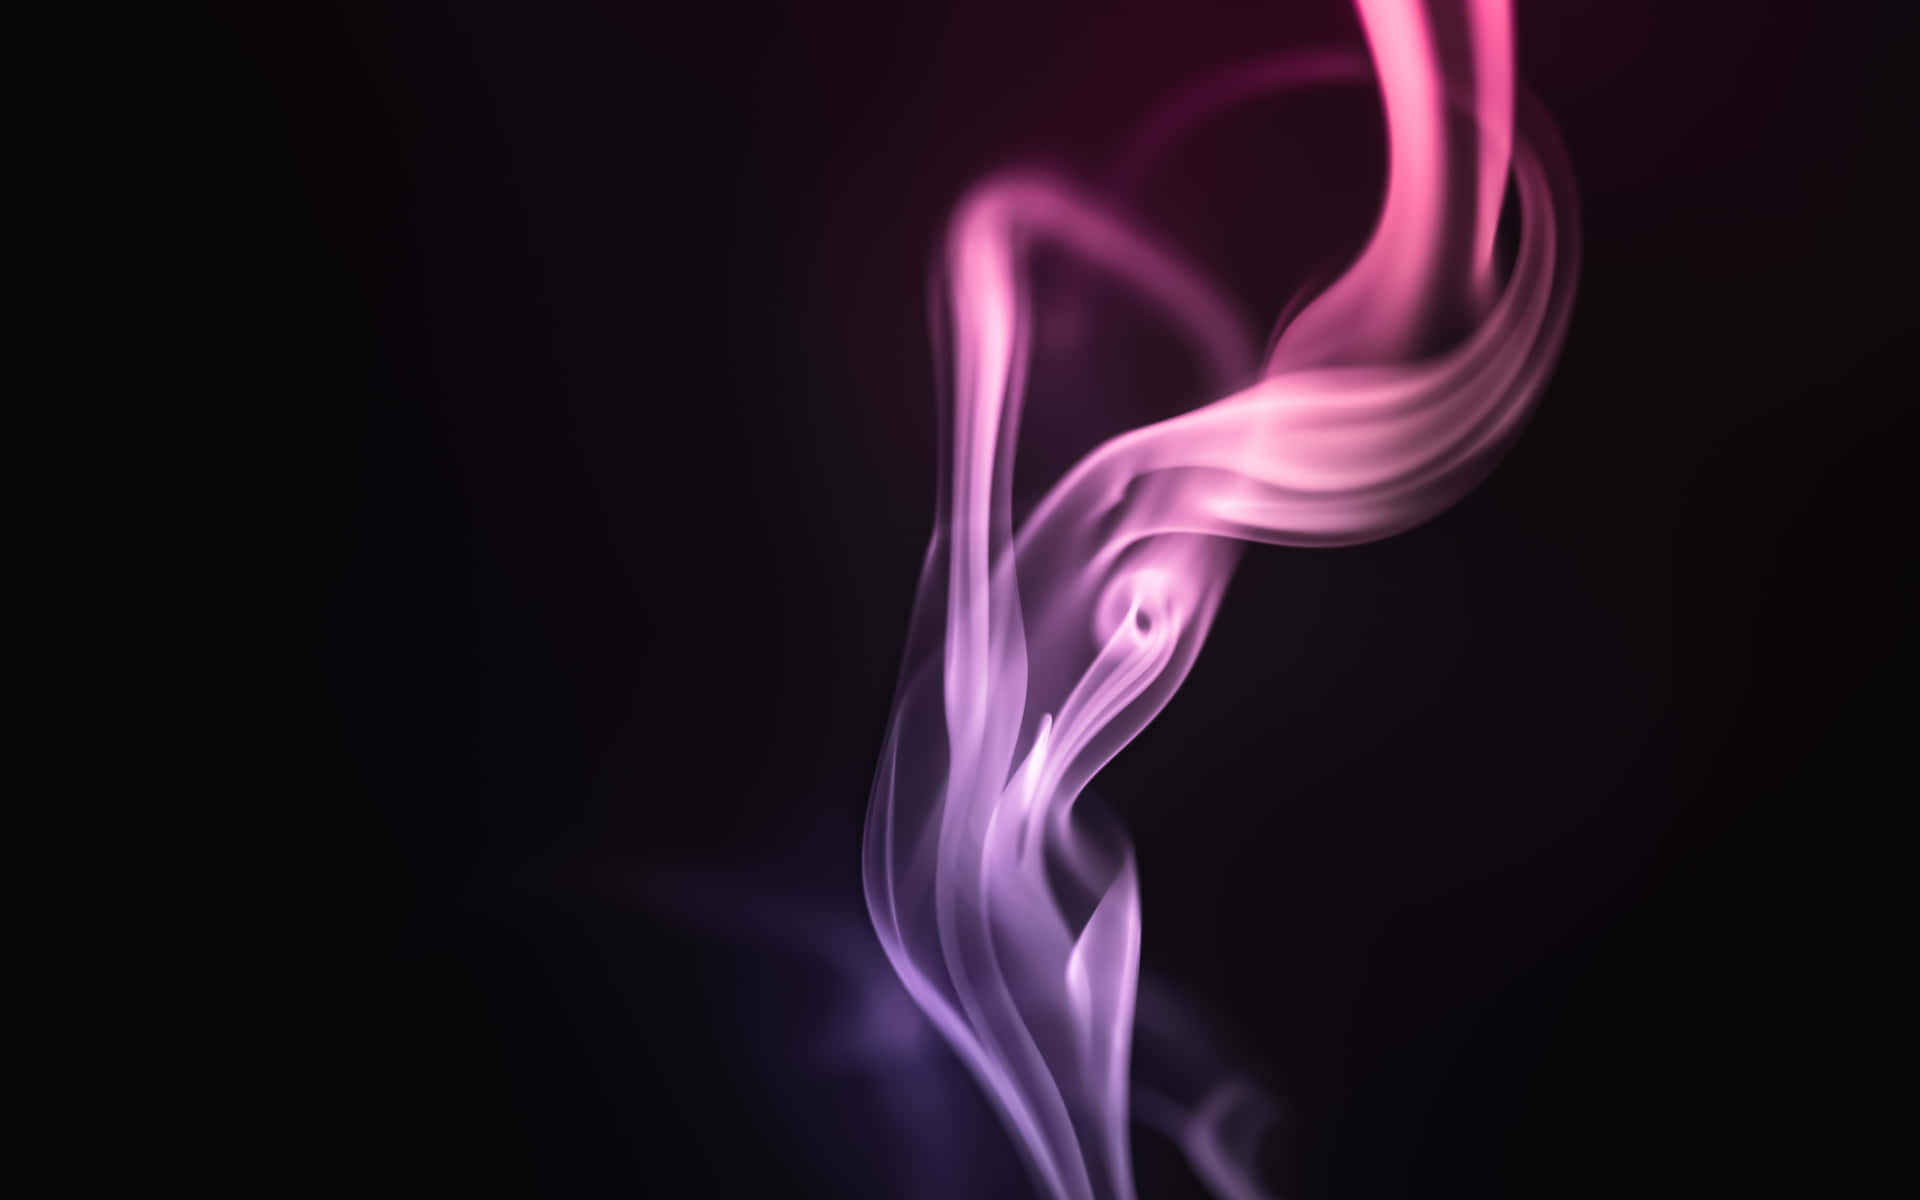 A Pink And Purple Smoke On A Black Background